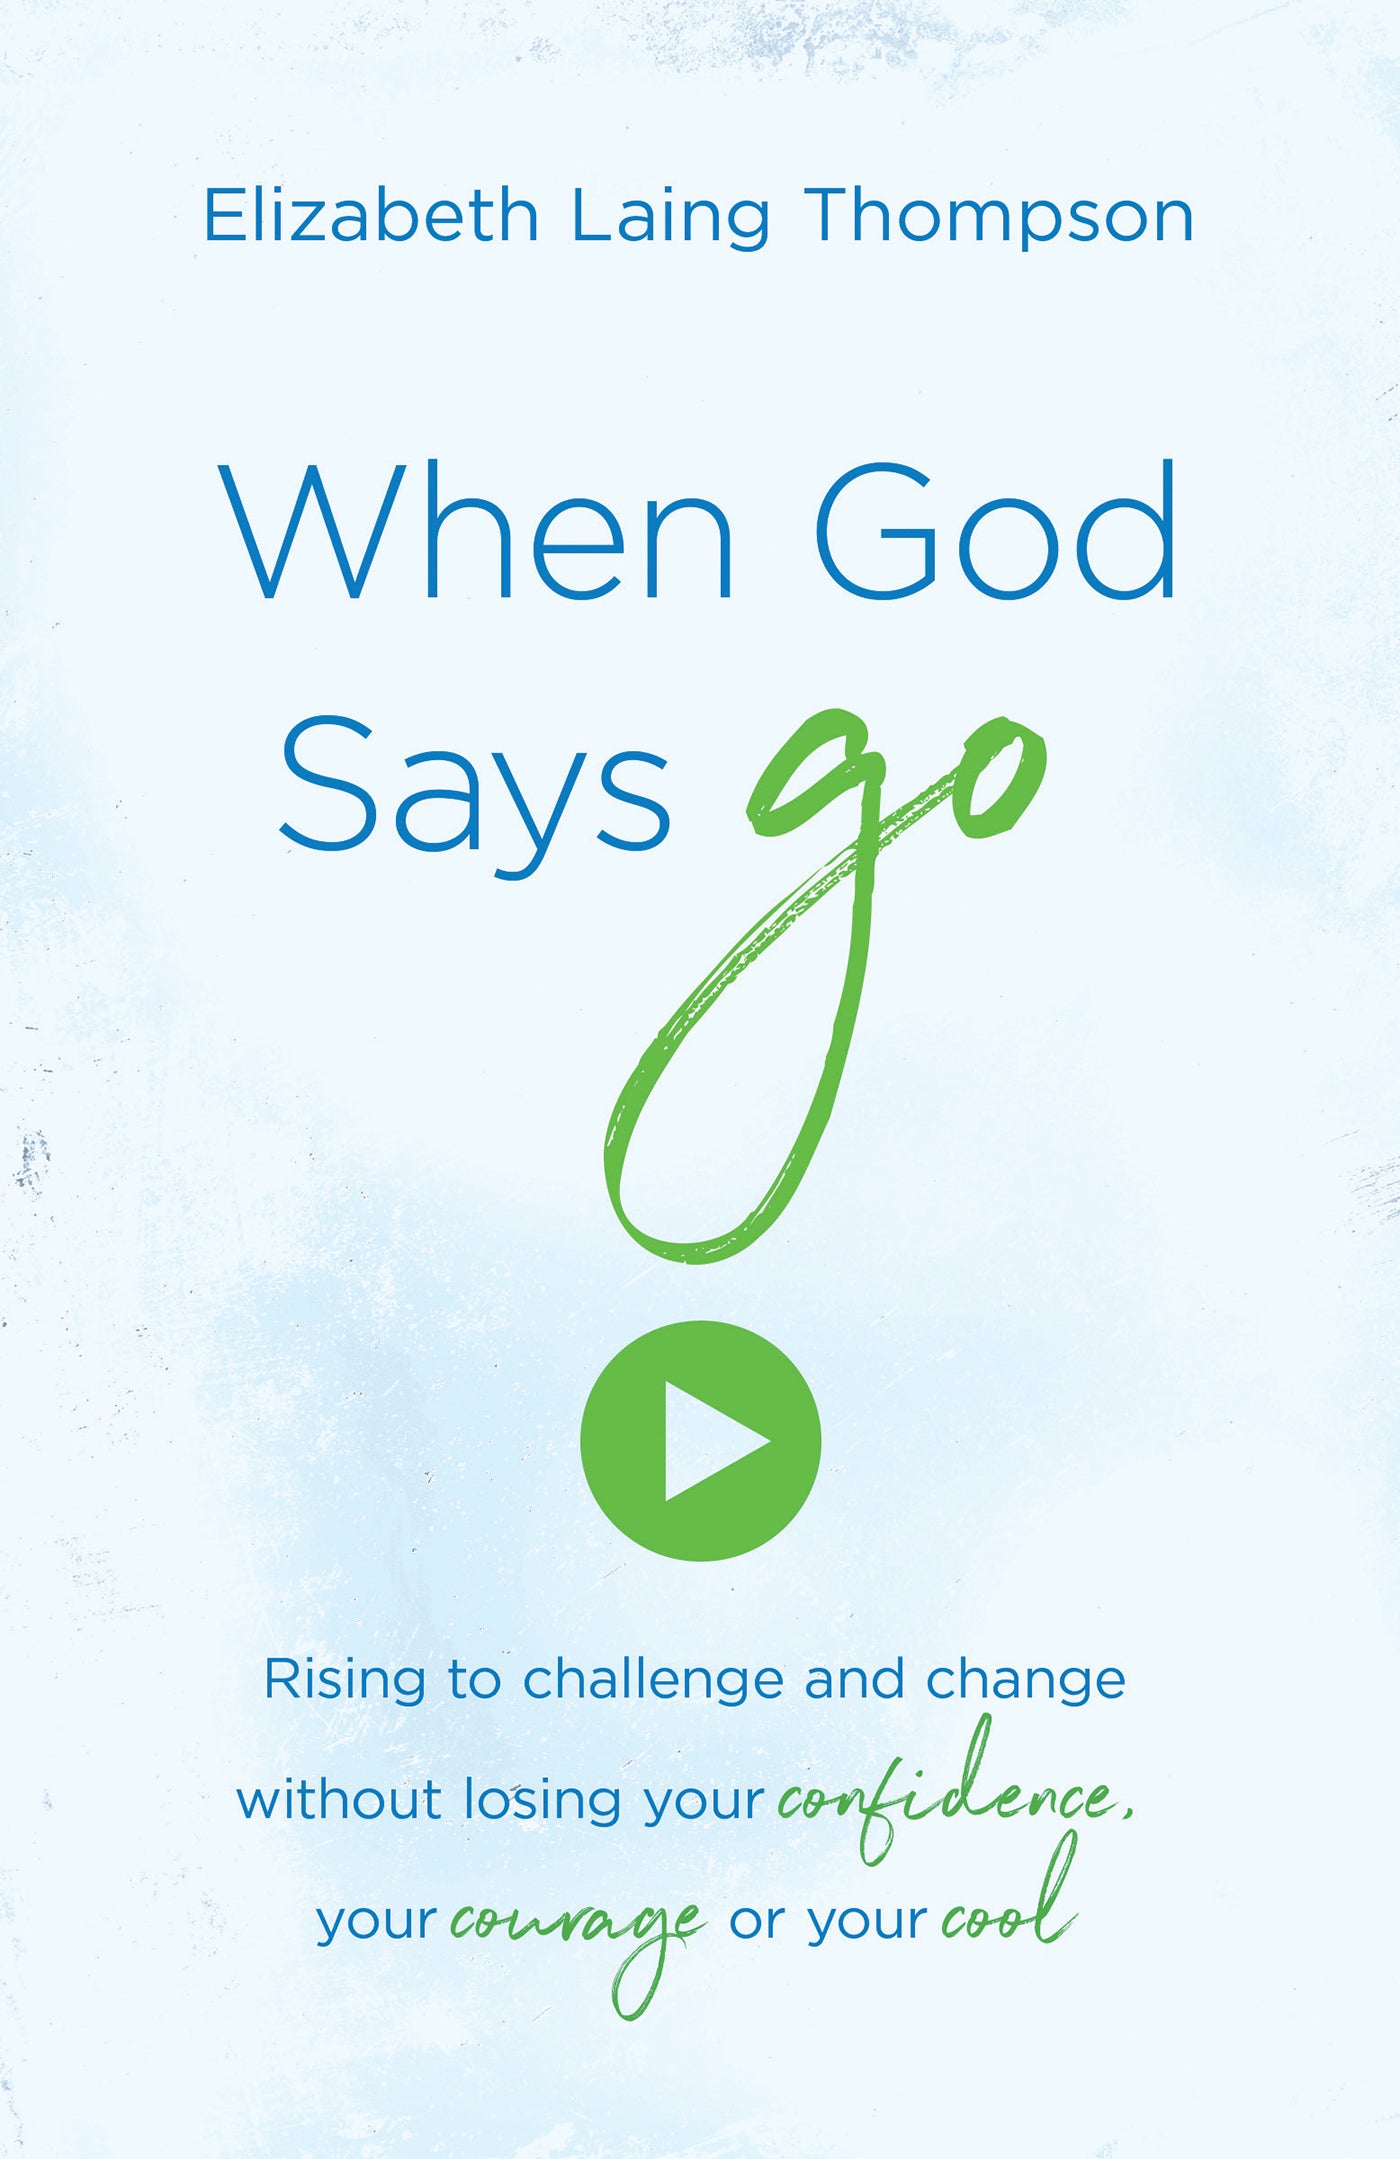 When God Says "Go" - The Christian Gift Company